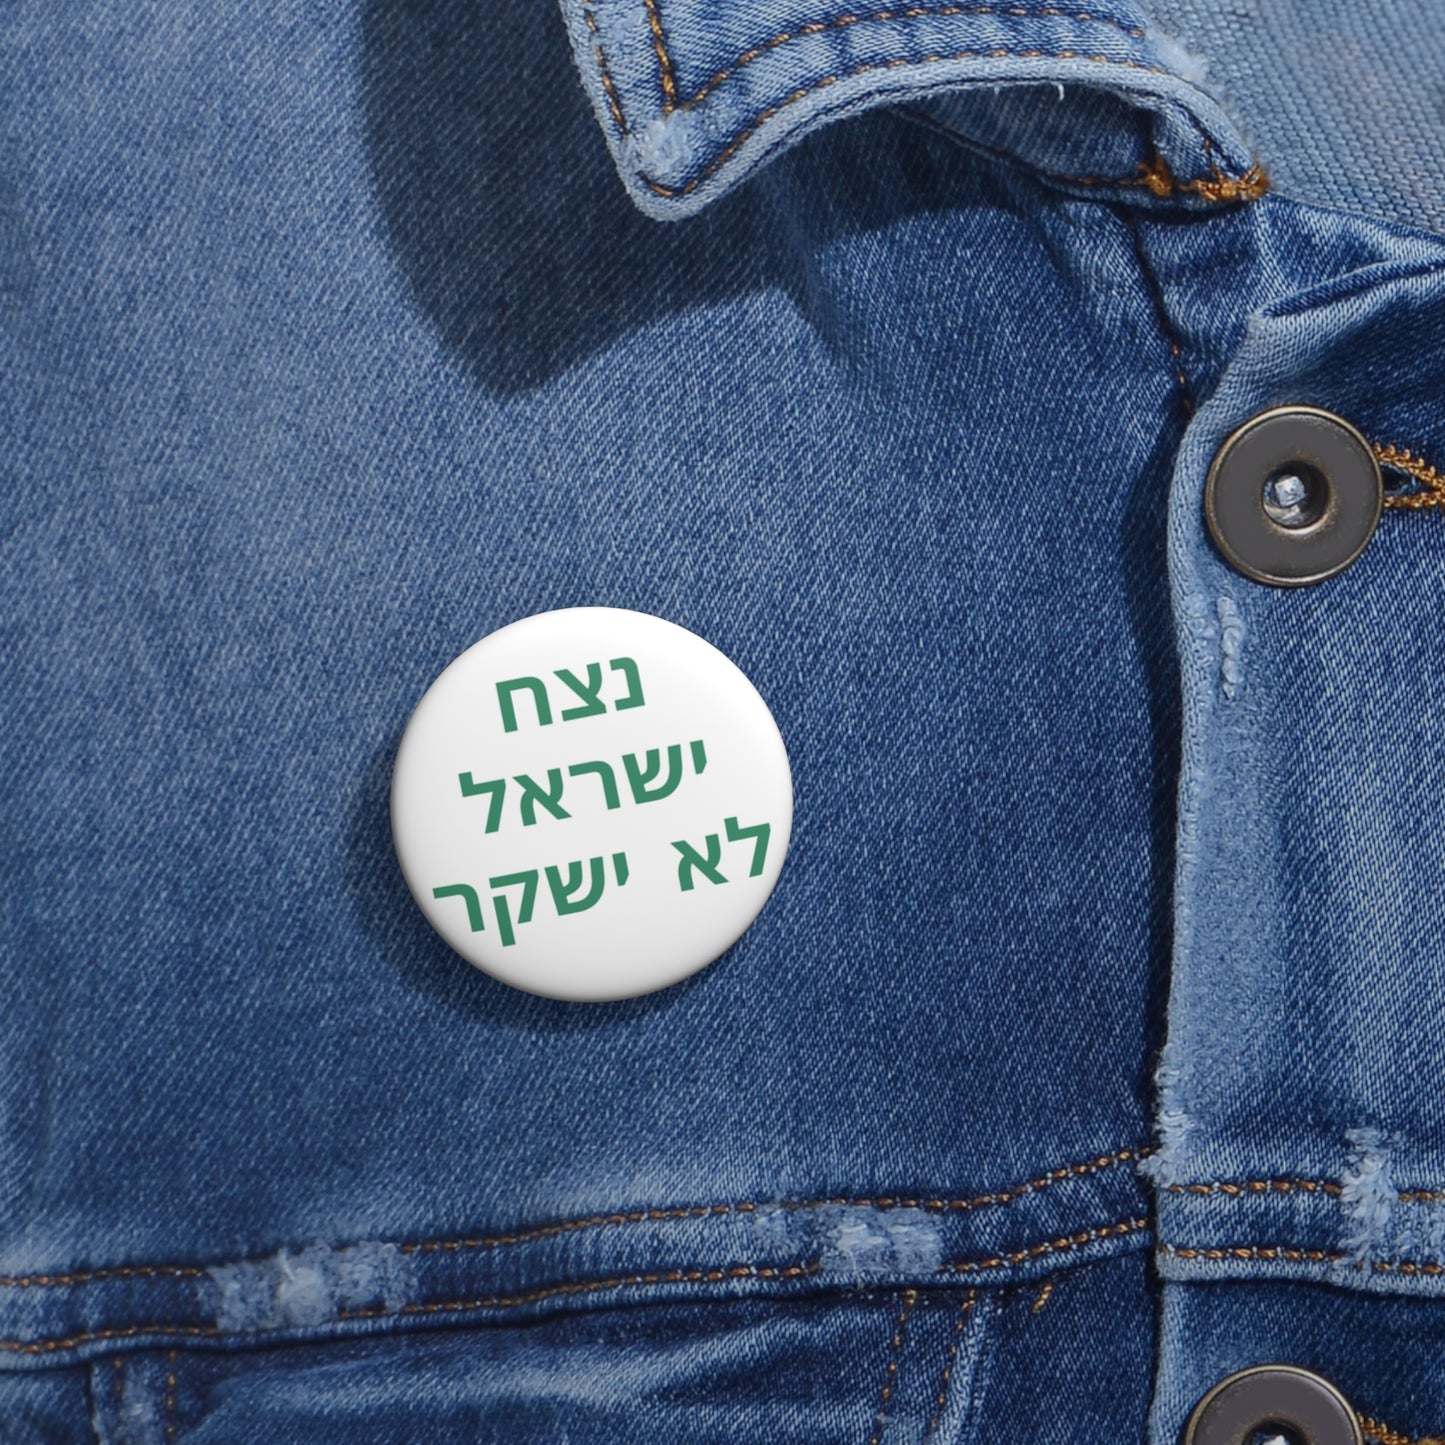 נצח ישראל לא ישקר Pin Buttons